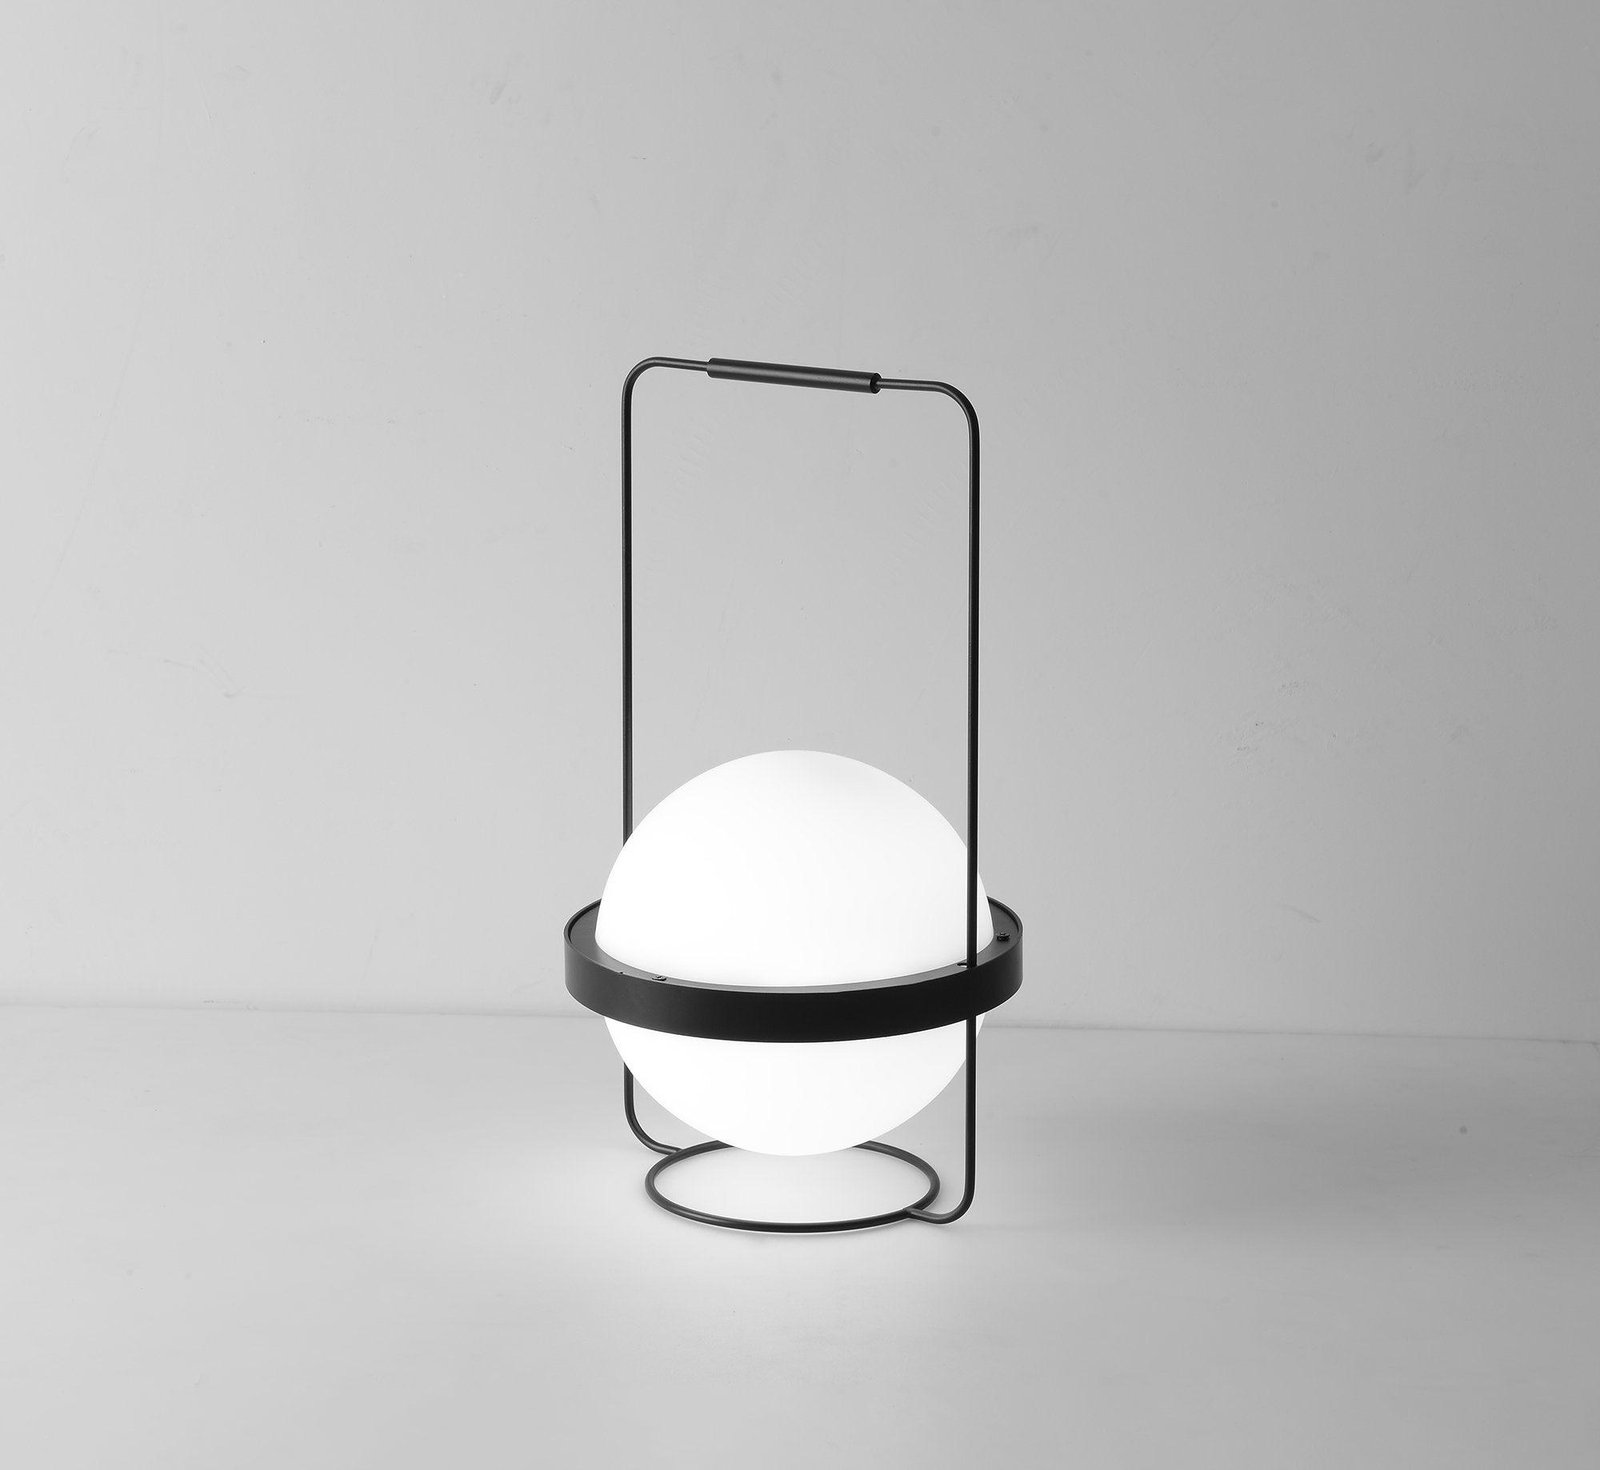 Black "Palma" Table Lamp with UK Plug, 9.8-inch Diameter x 21.7-inch Height (22cm x 42cm), 3000k